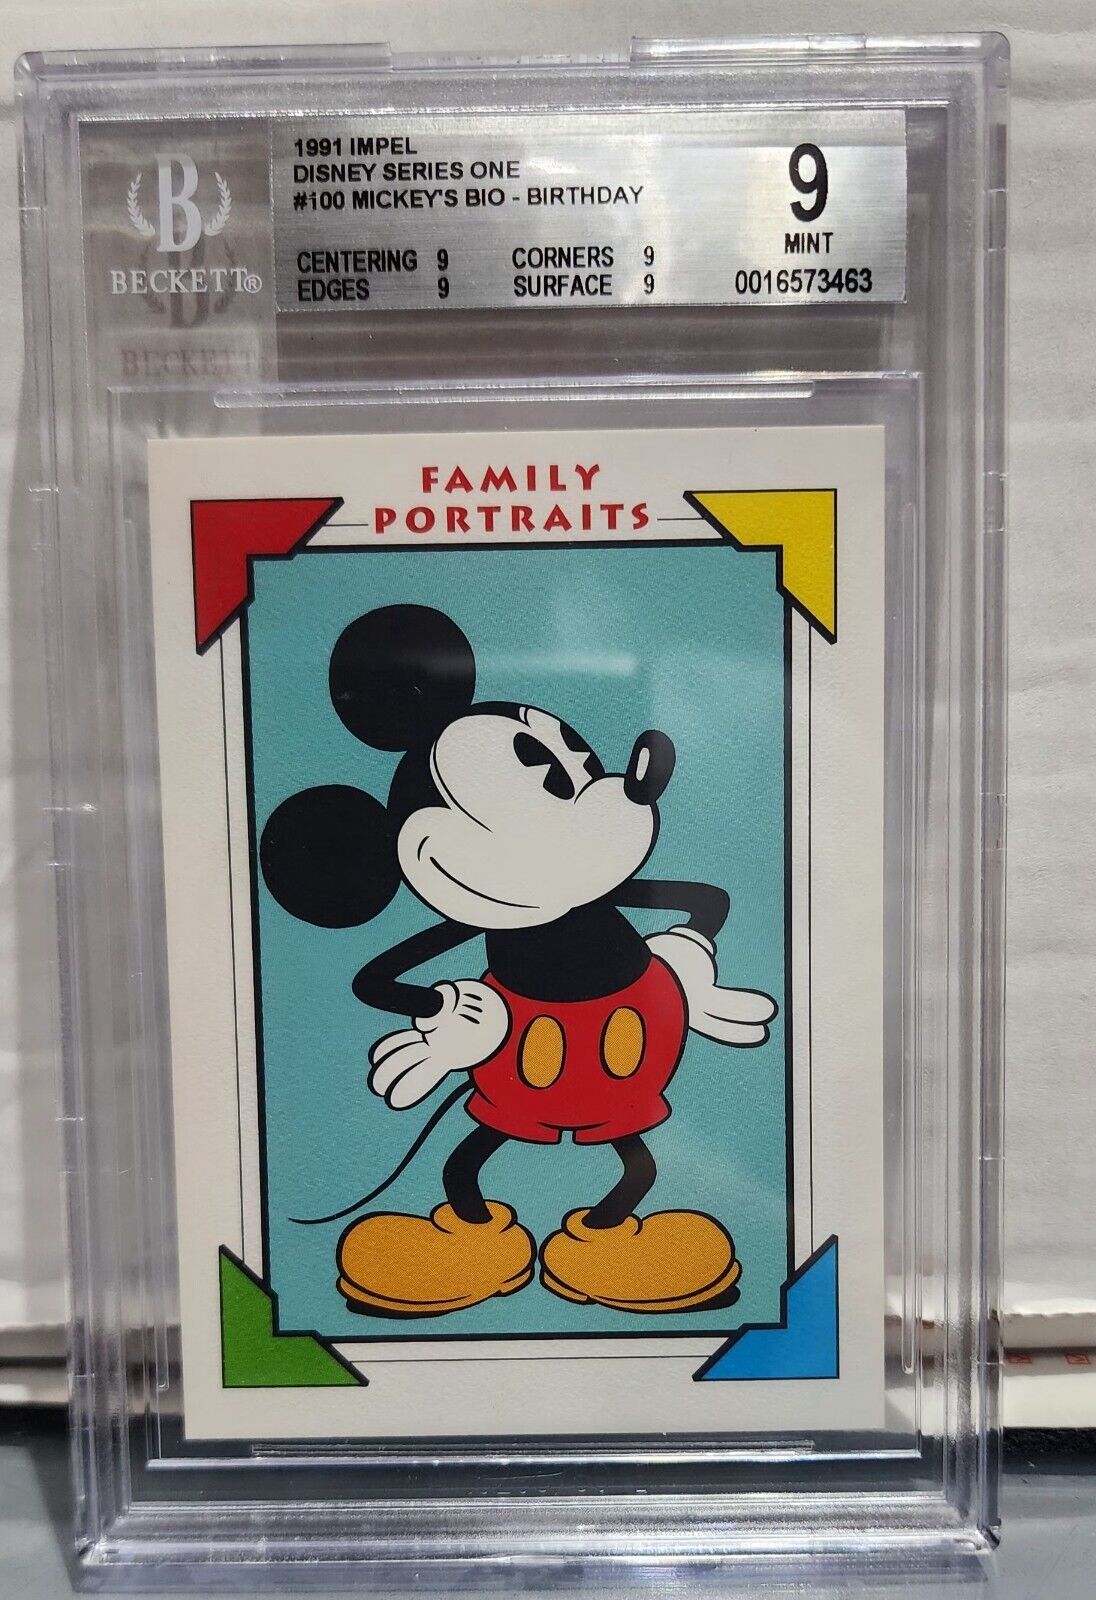 1991 Disney Impel Card #100 Mickey - Bio - BGS 9 Grade